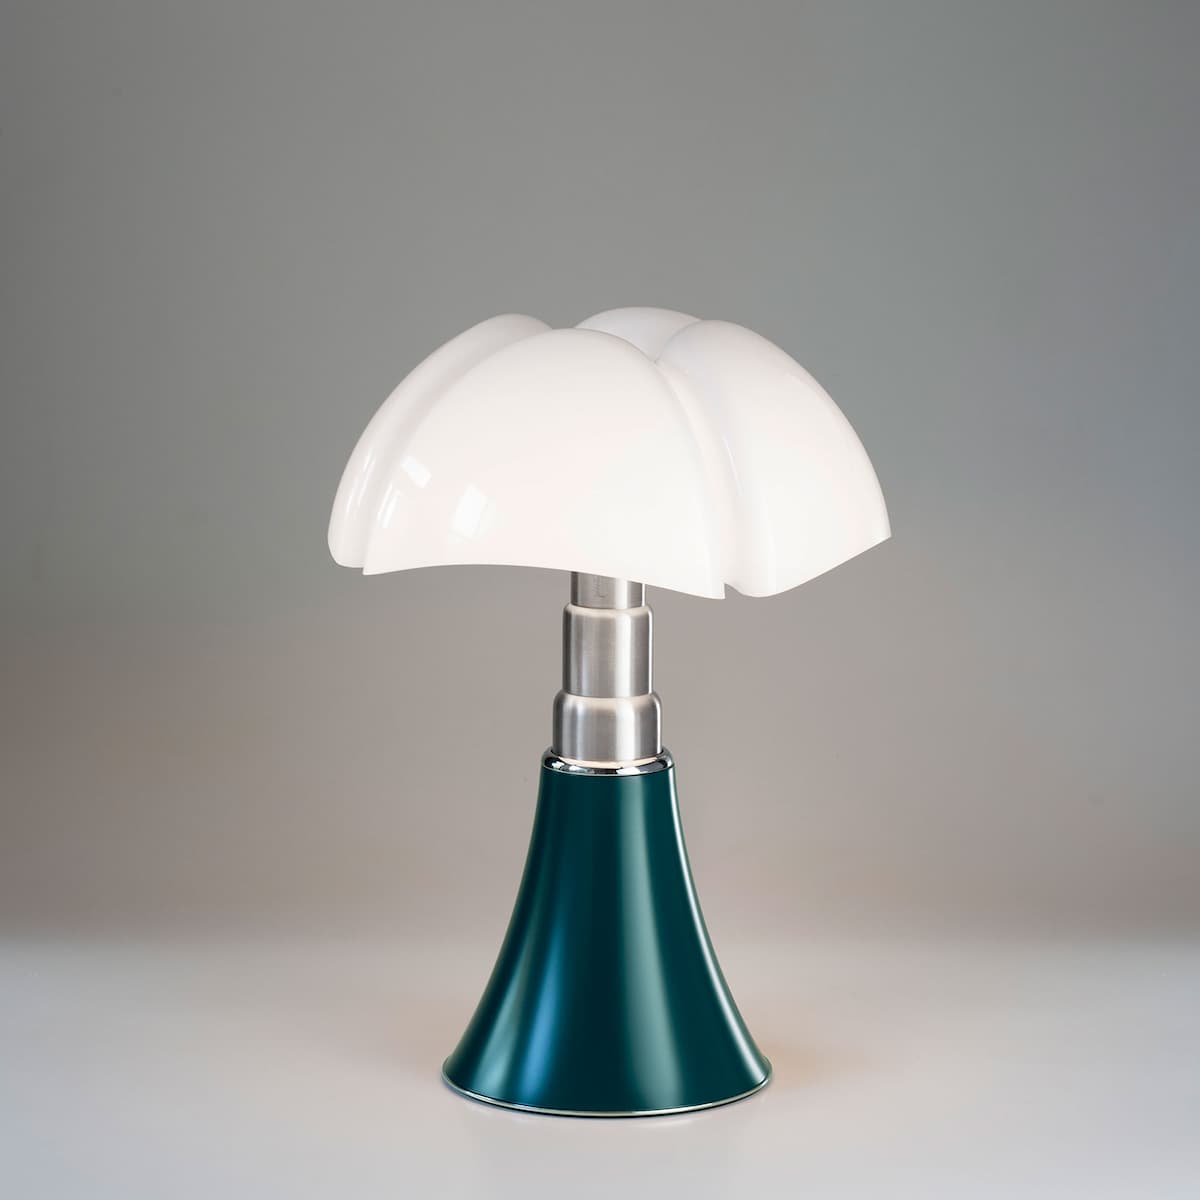 Minipipistrello Cordless Table Lamp, Agave Green - Dimmable